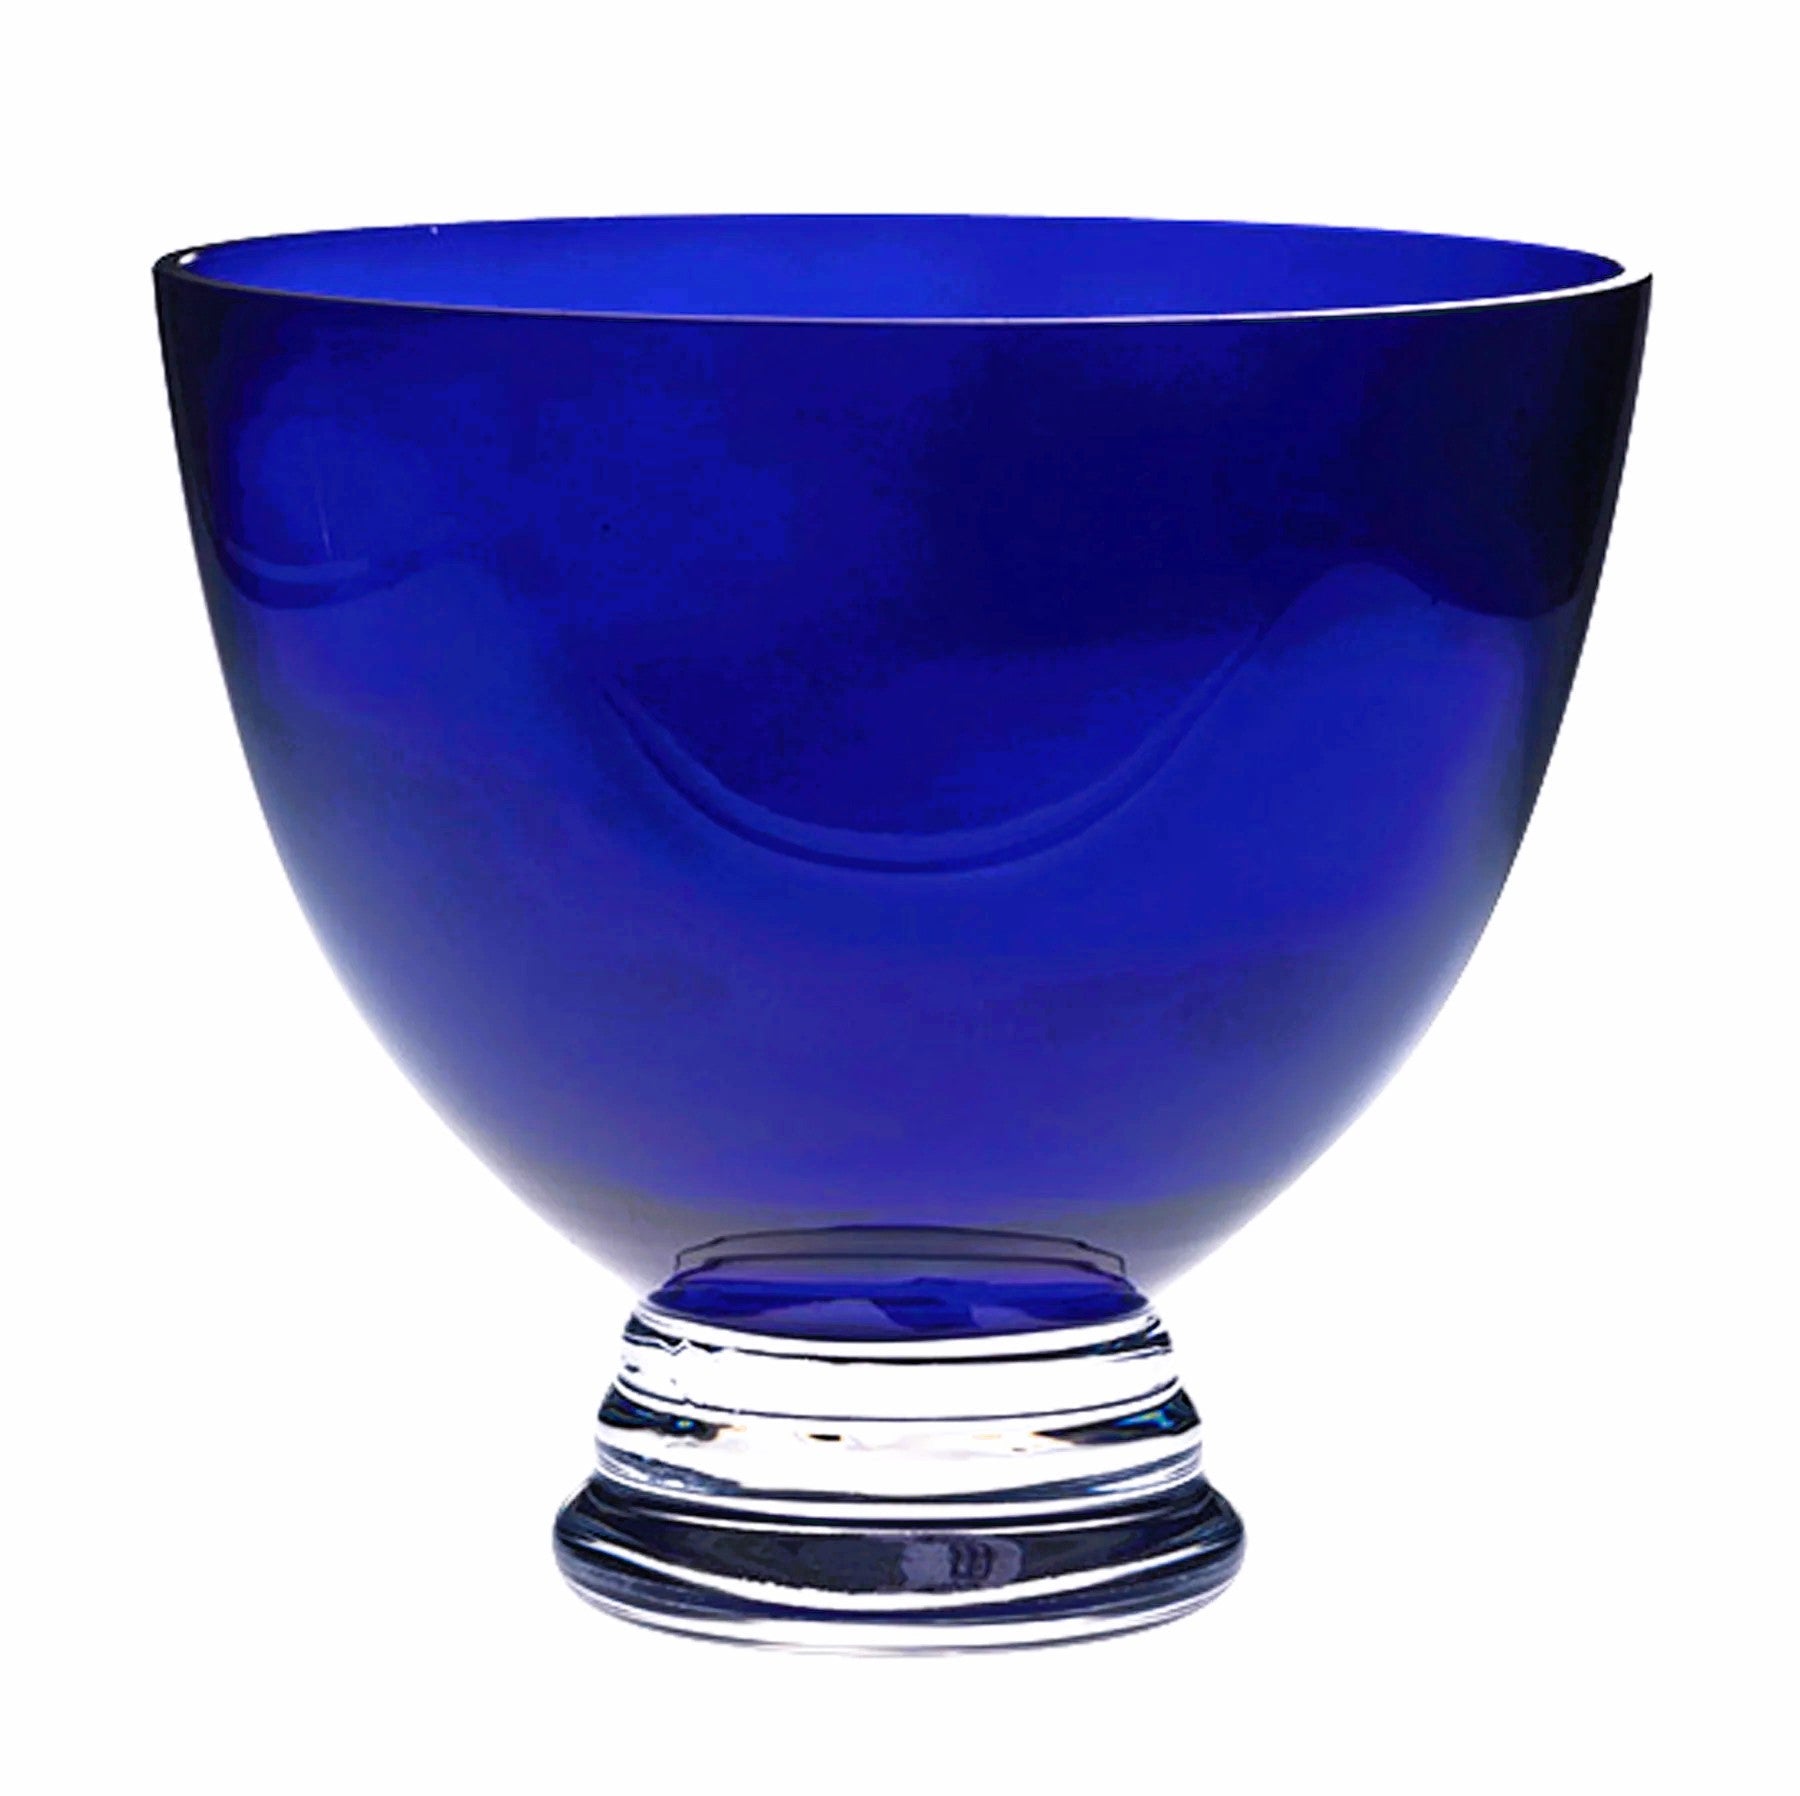 Cobalt Blue Crystal Bowl 11"diameter X 9.3"high made in Poland